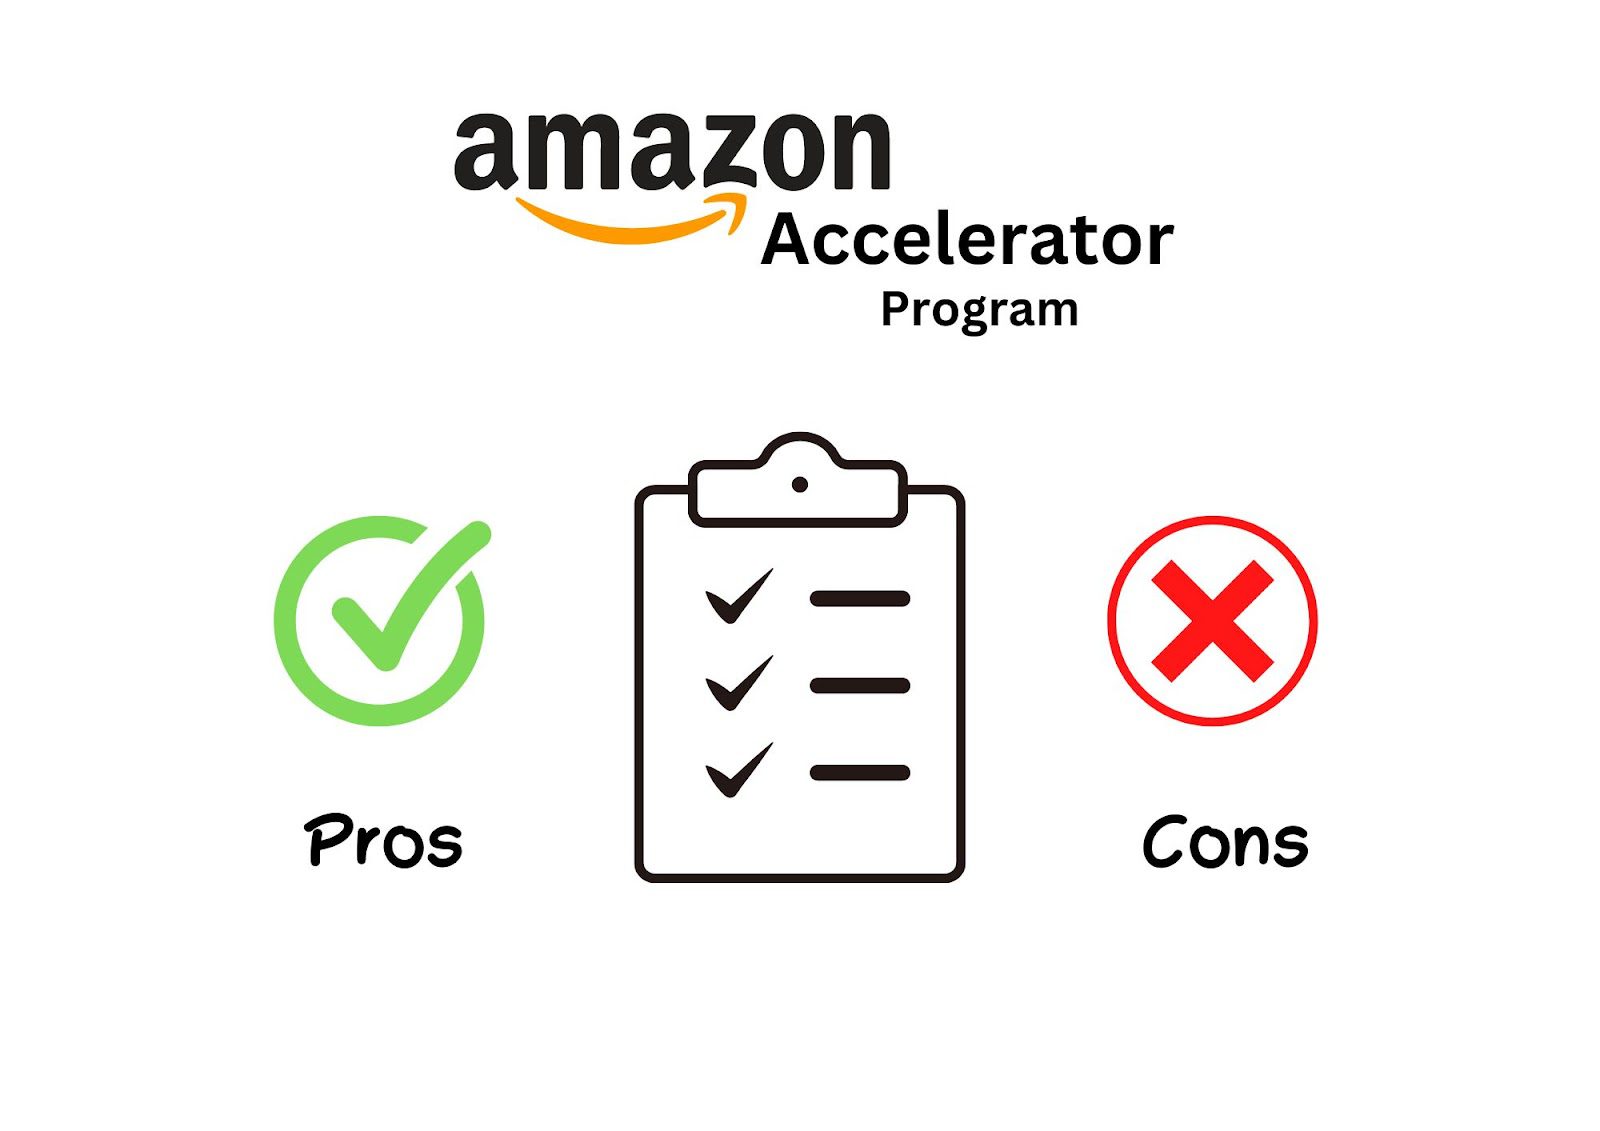  Amazon Accelerator Program